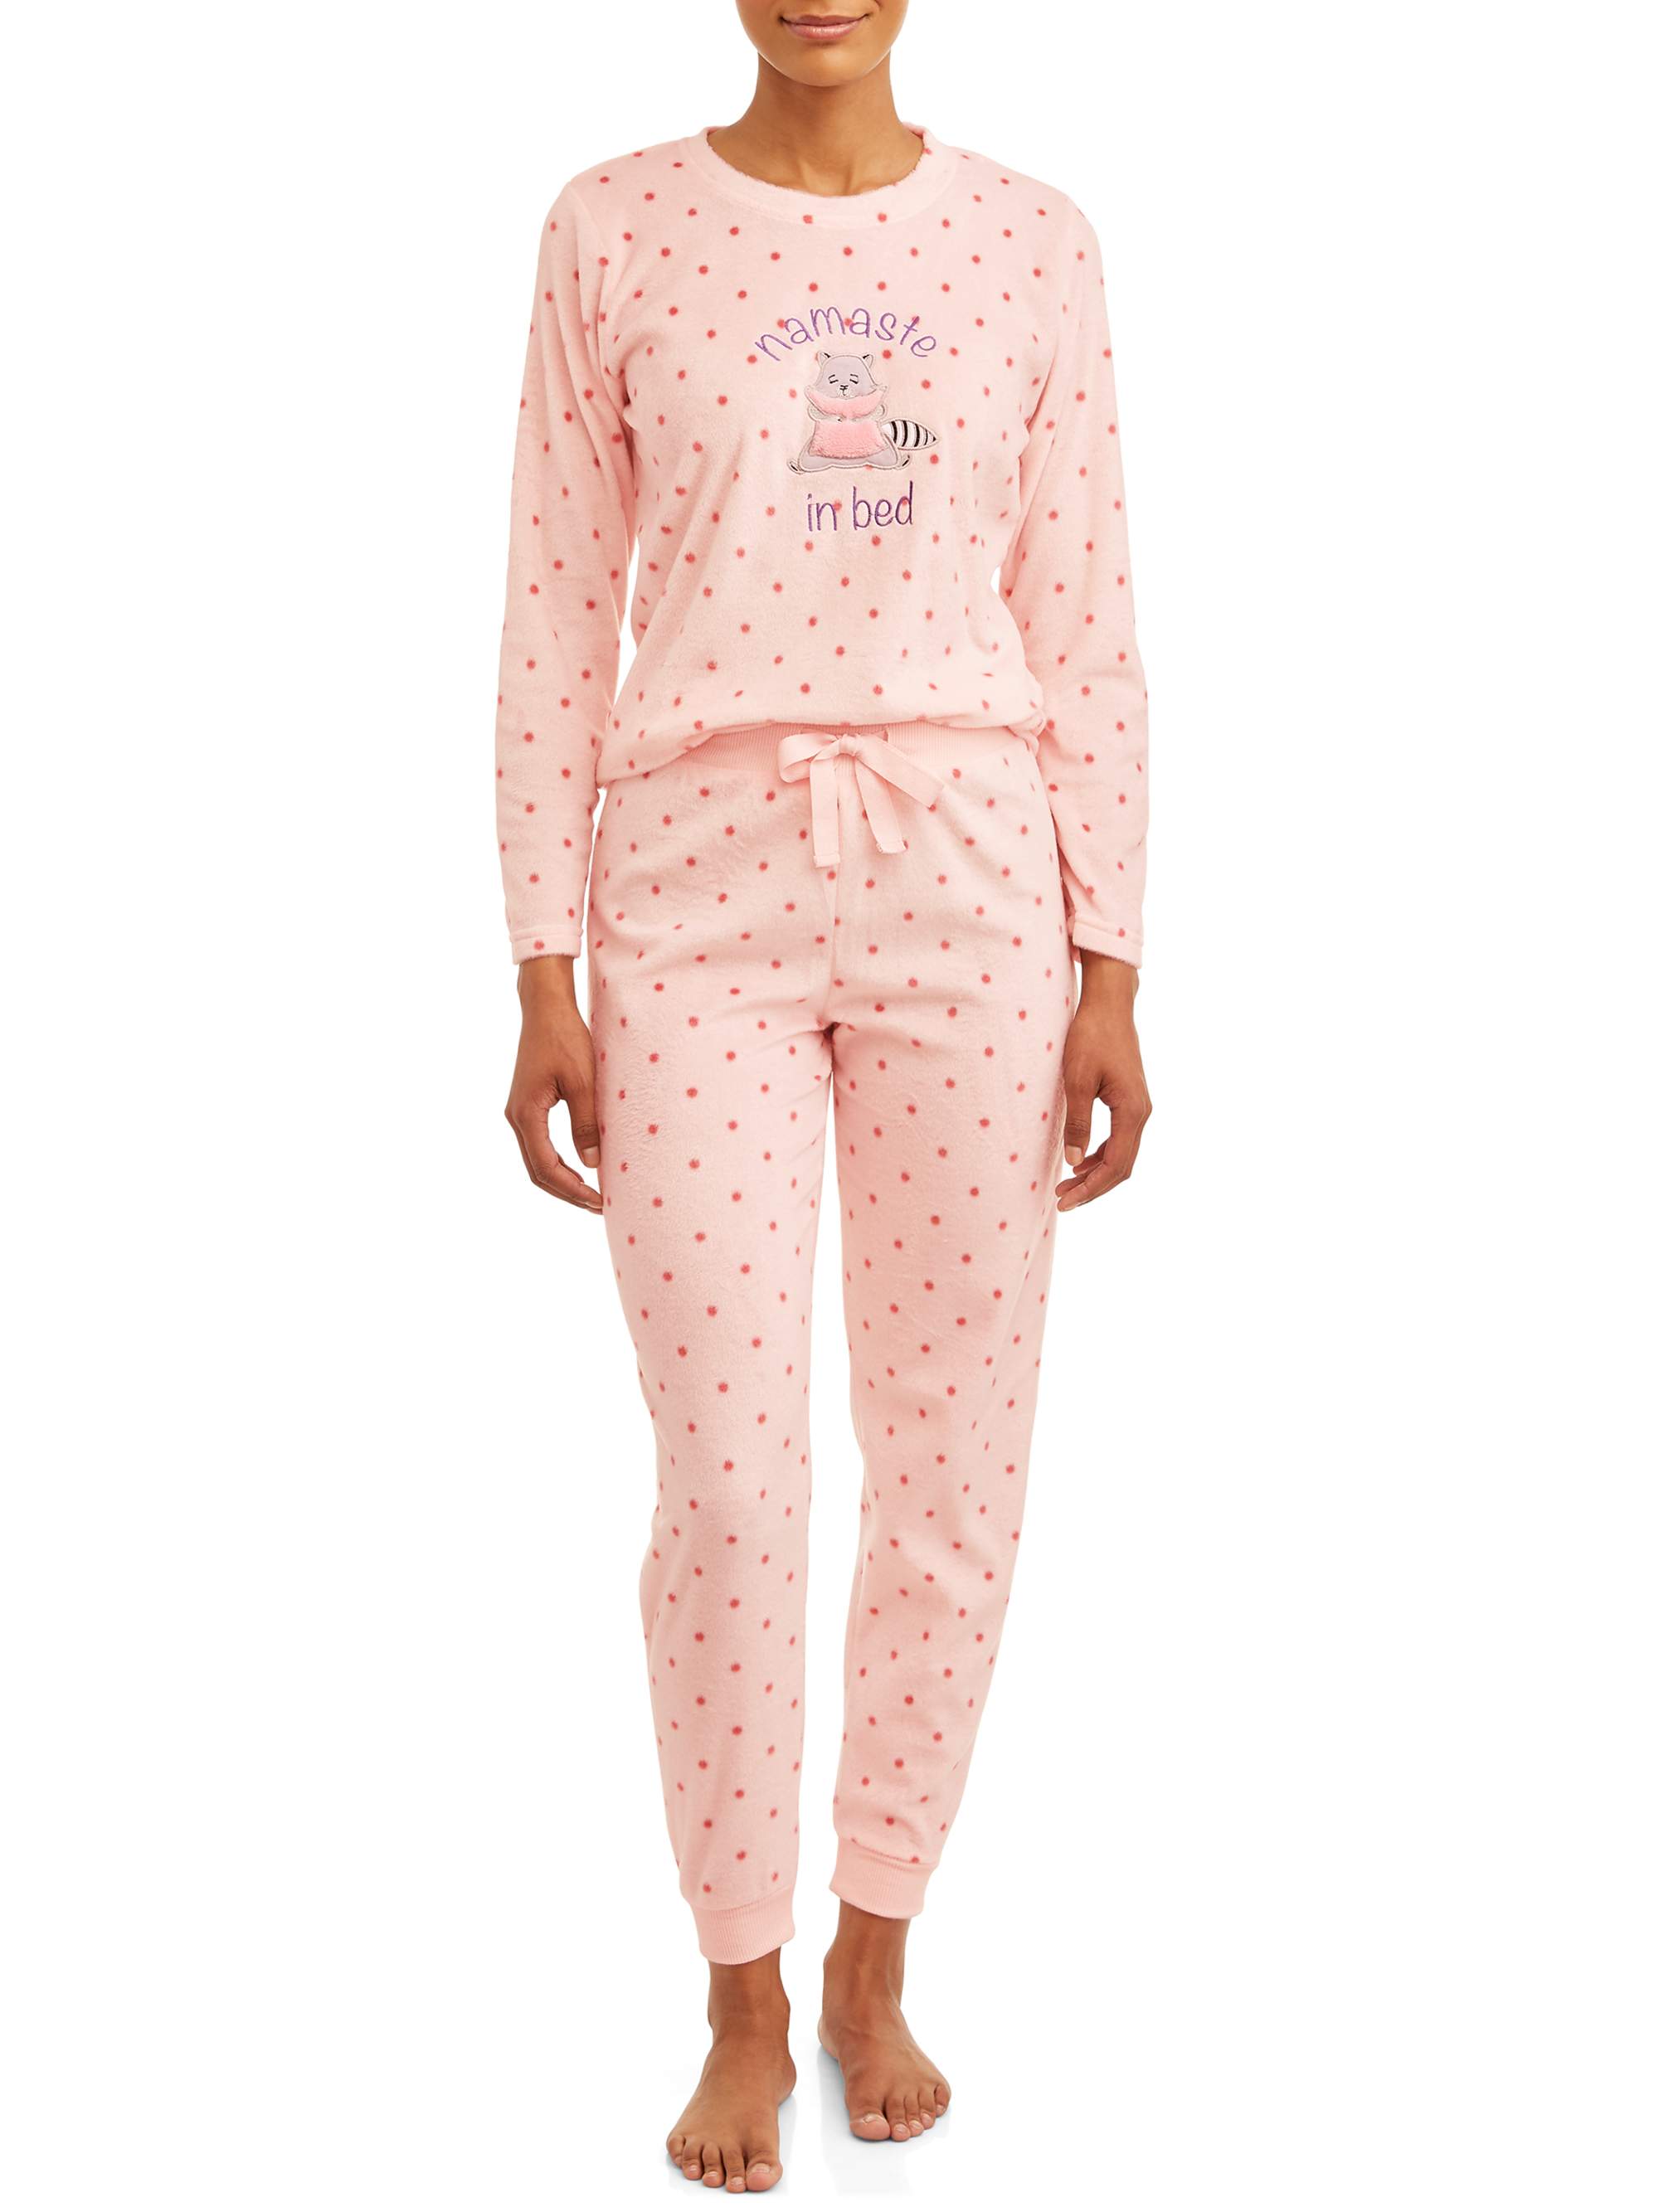 Cozy Critter Women's Super Plush Applique Character Pajama Set - image 1 of 3